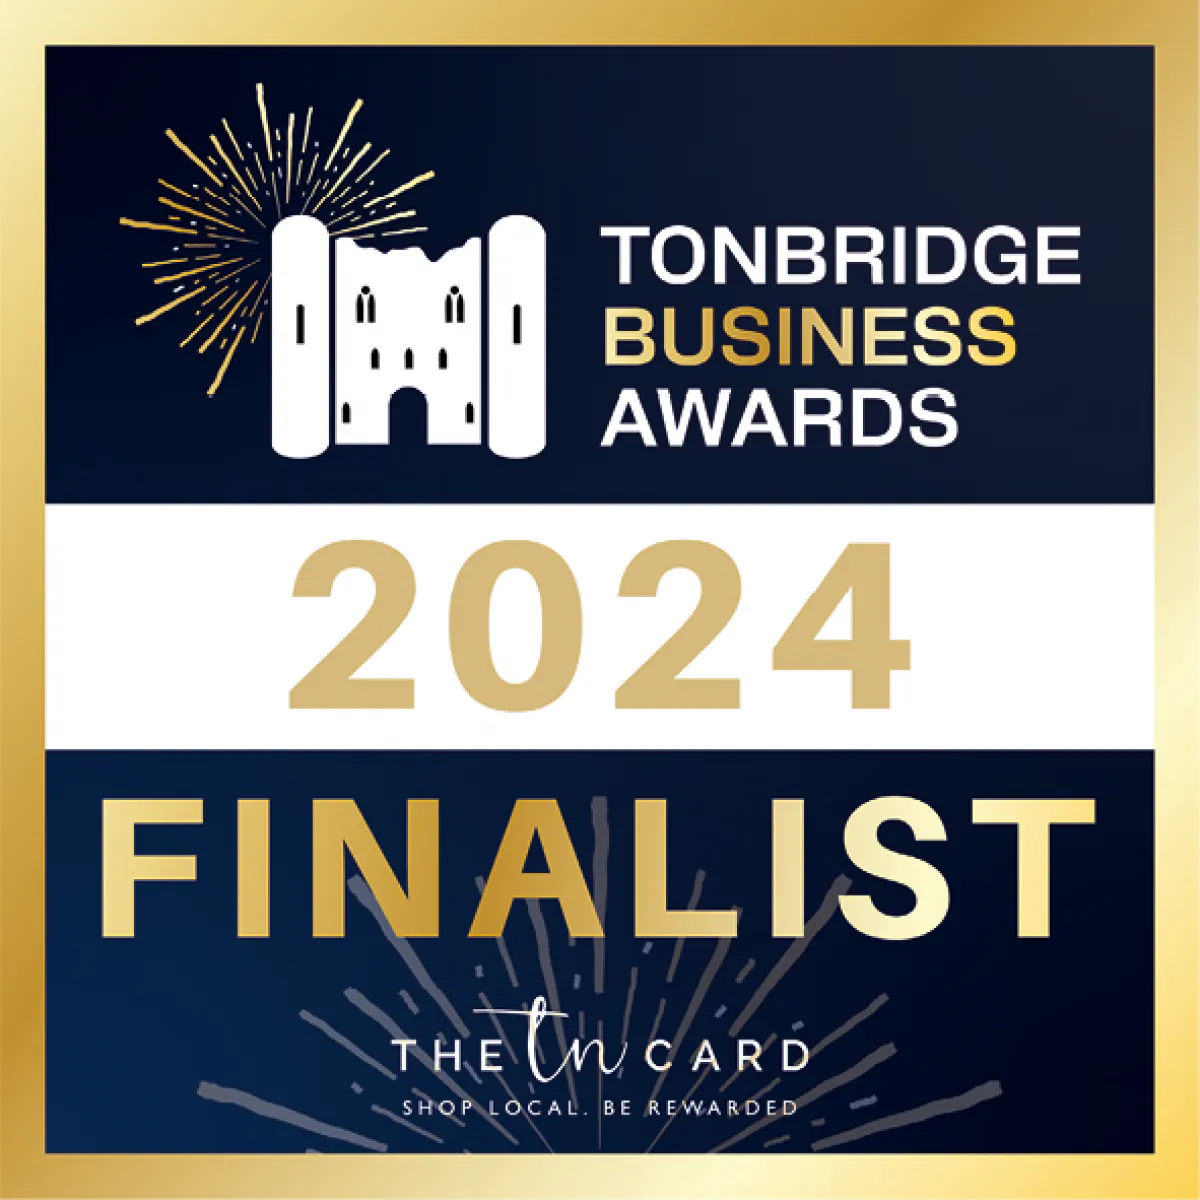 Tonbridge Business Awards Finalist 2024 Small